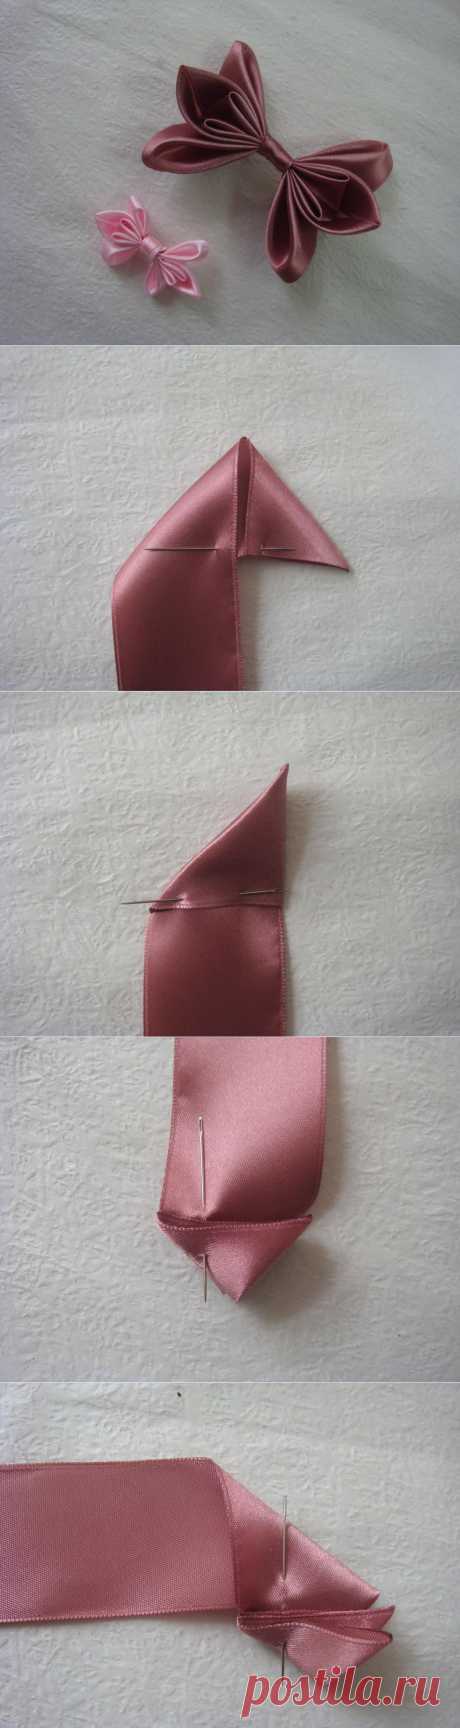 DIY Sophisticated Satin Ribbon Bow - Createsie